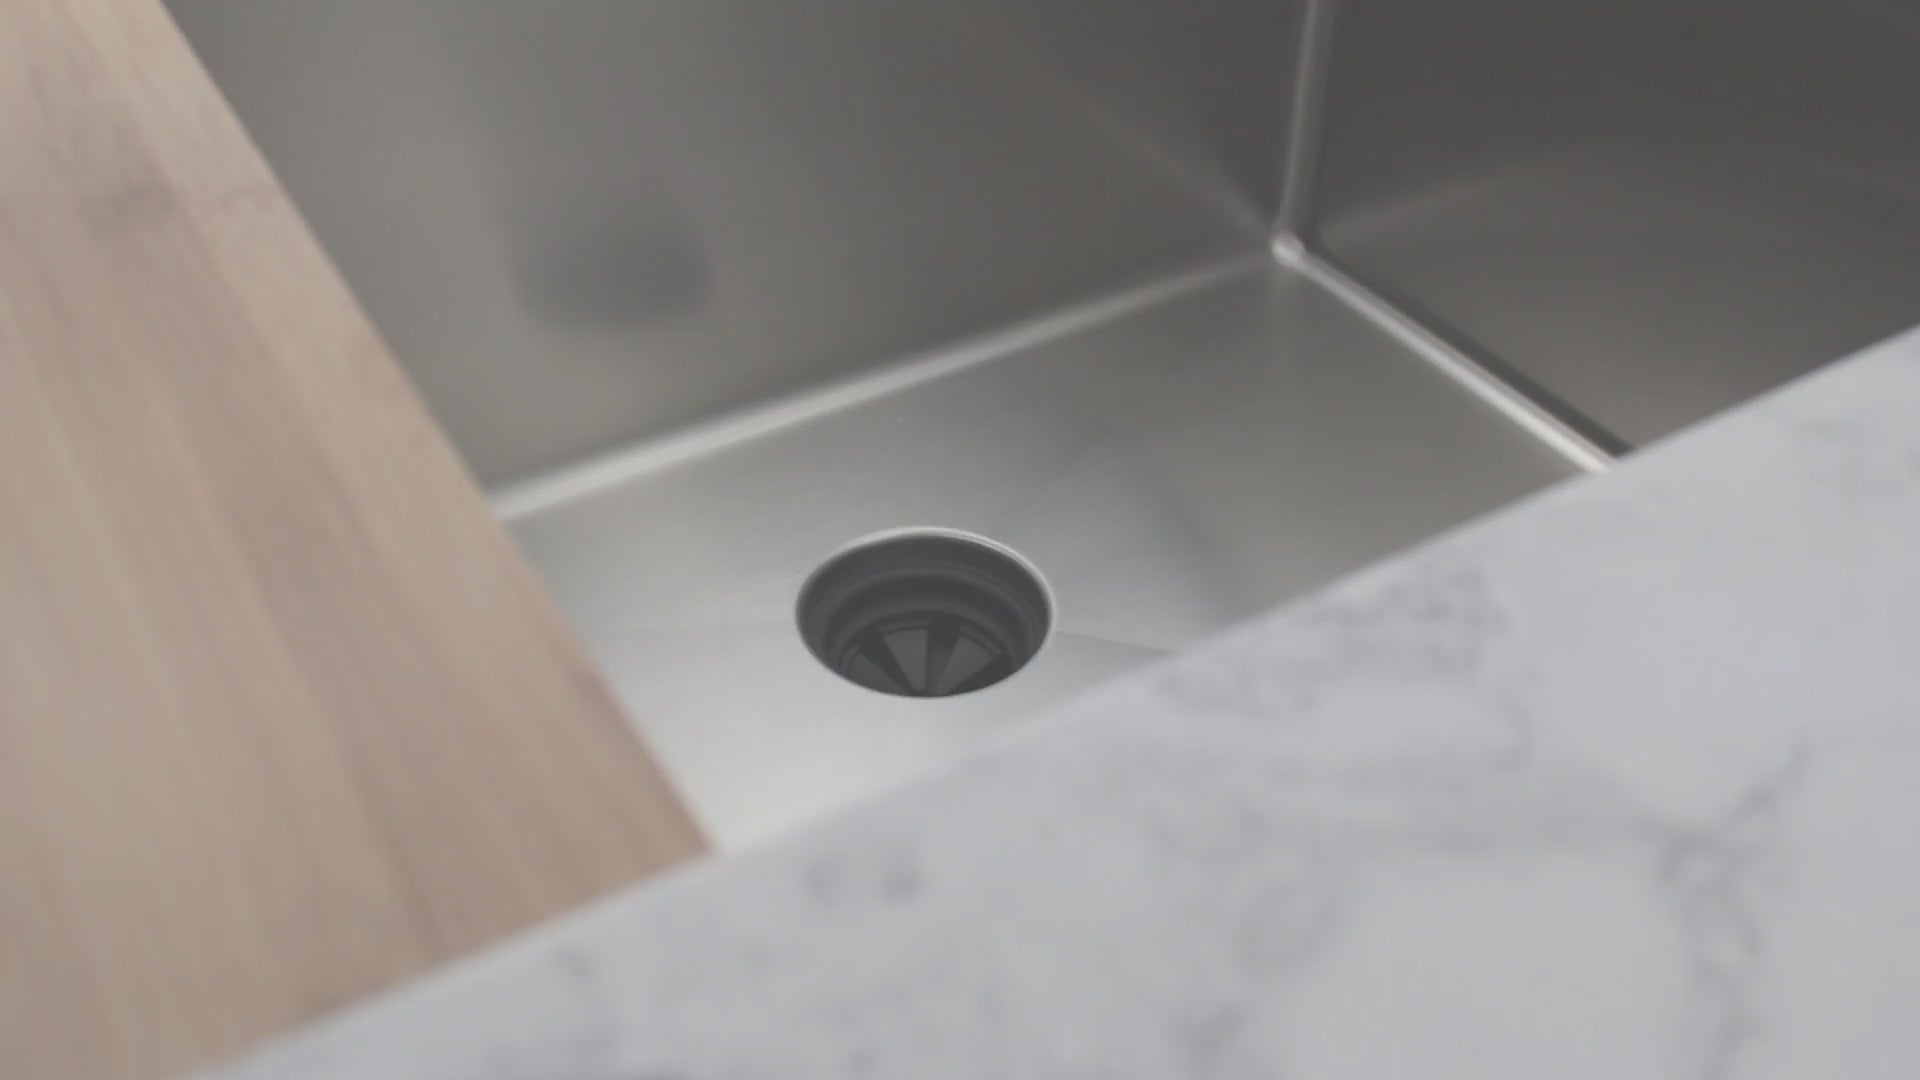 Video explanation of Create Good Sinks' Seamless Drain. Workstation sinks